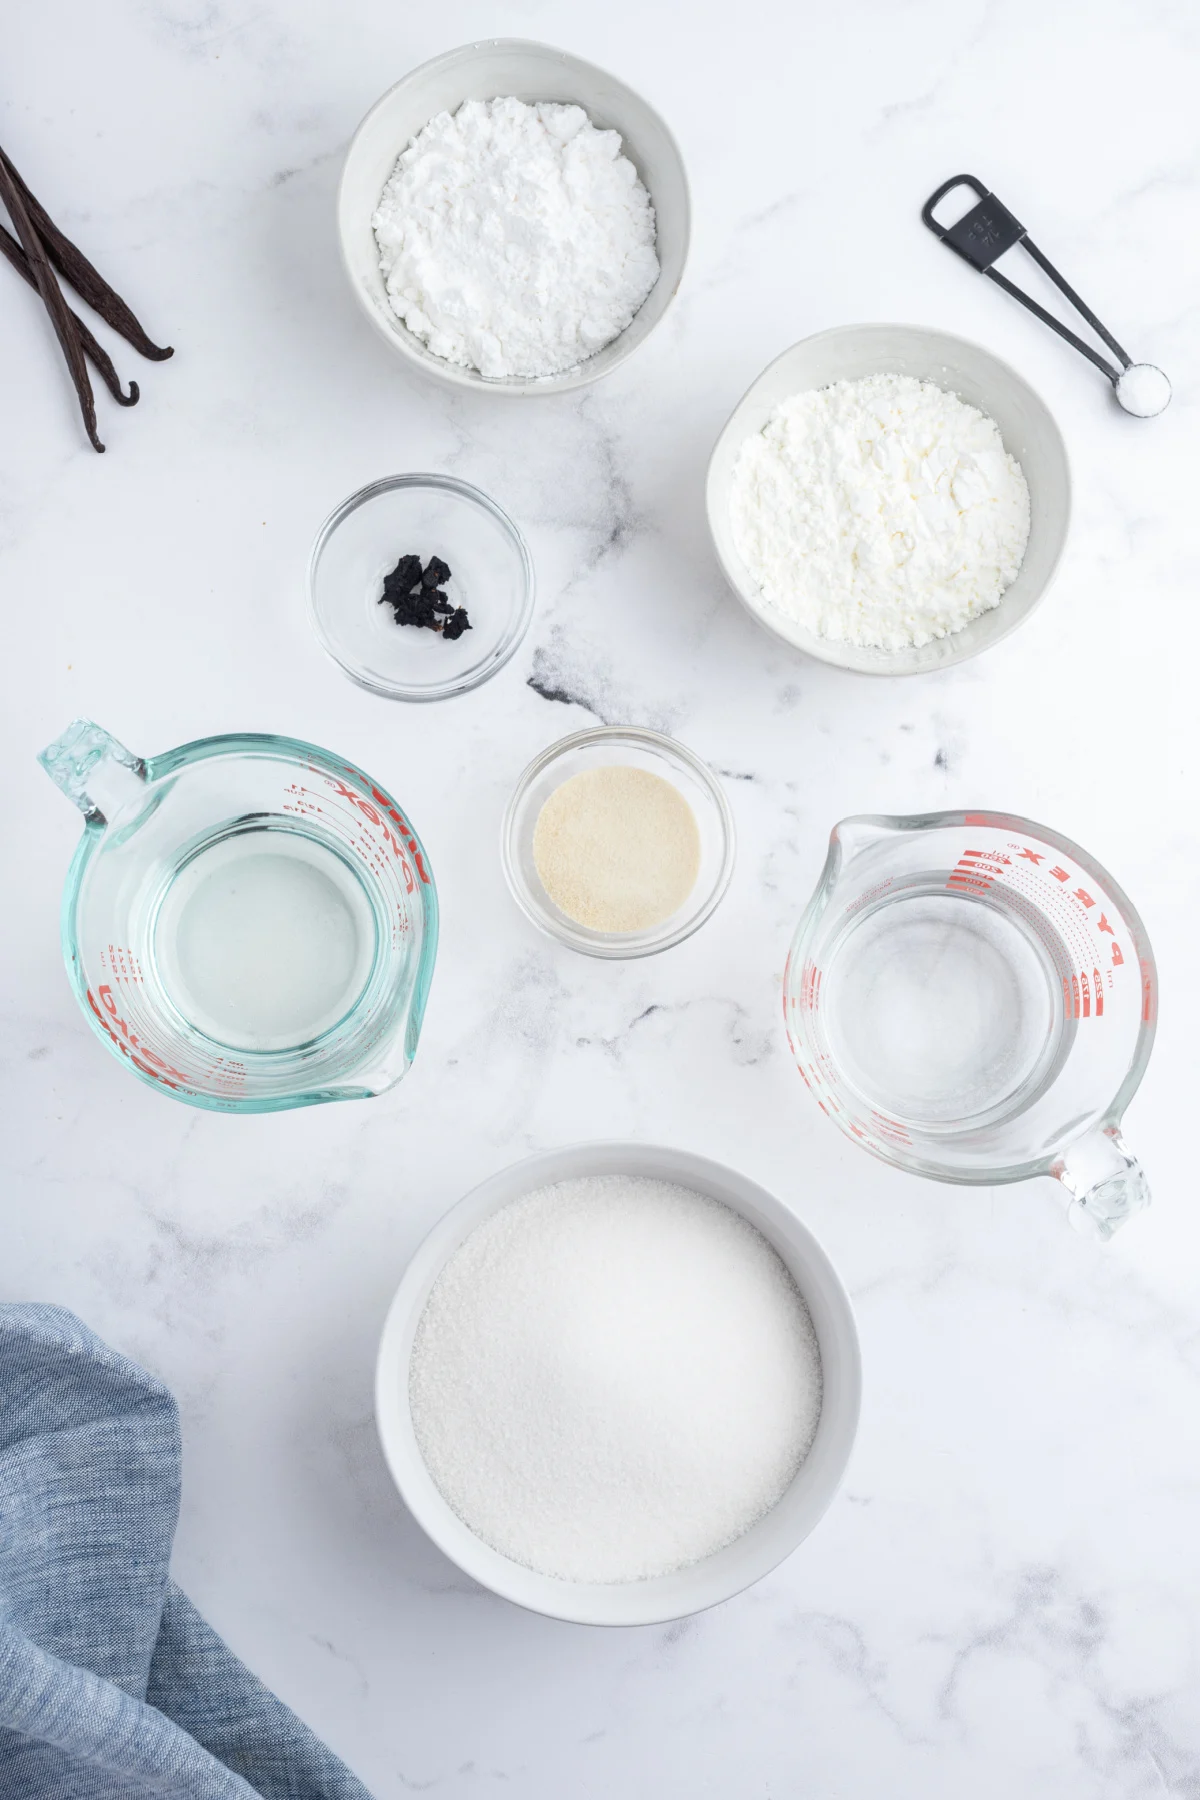 ingredients displayed for making homemade marshmallows